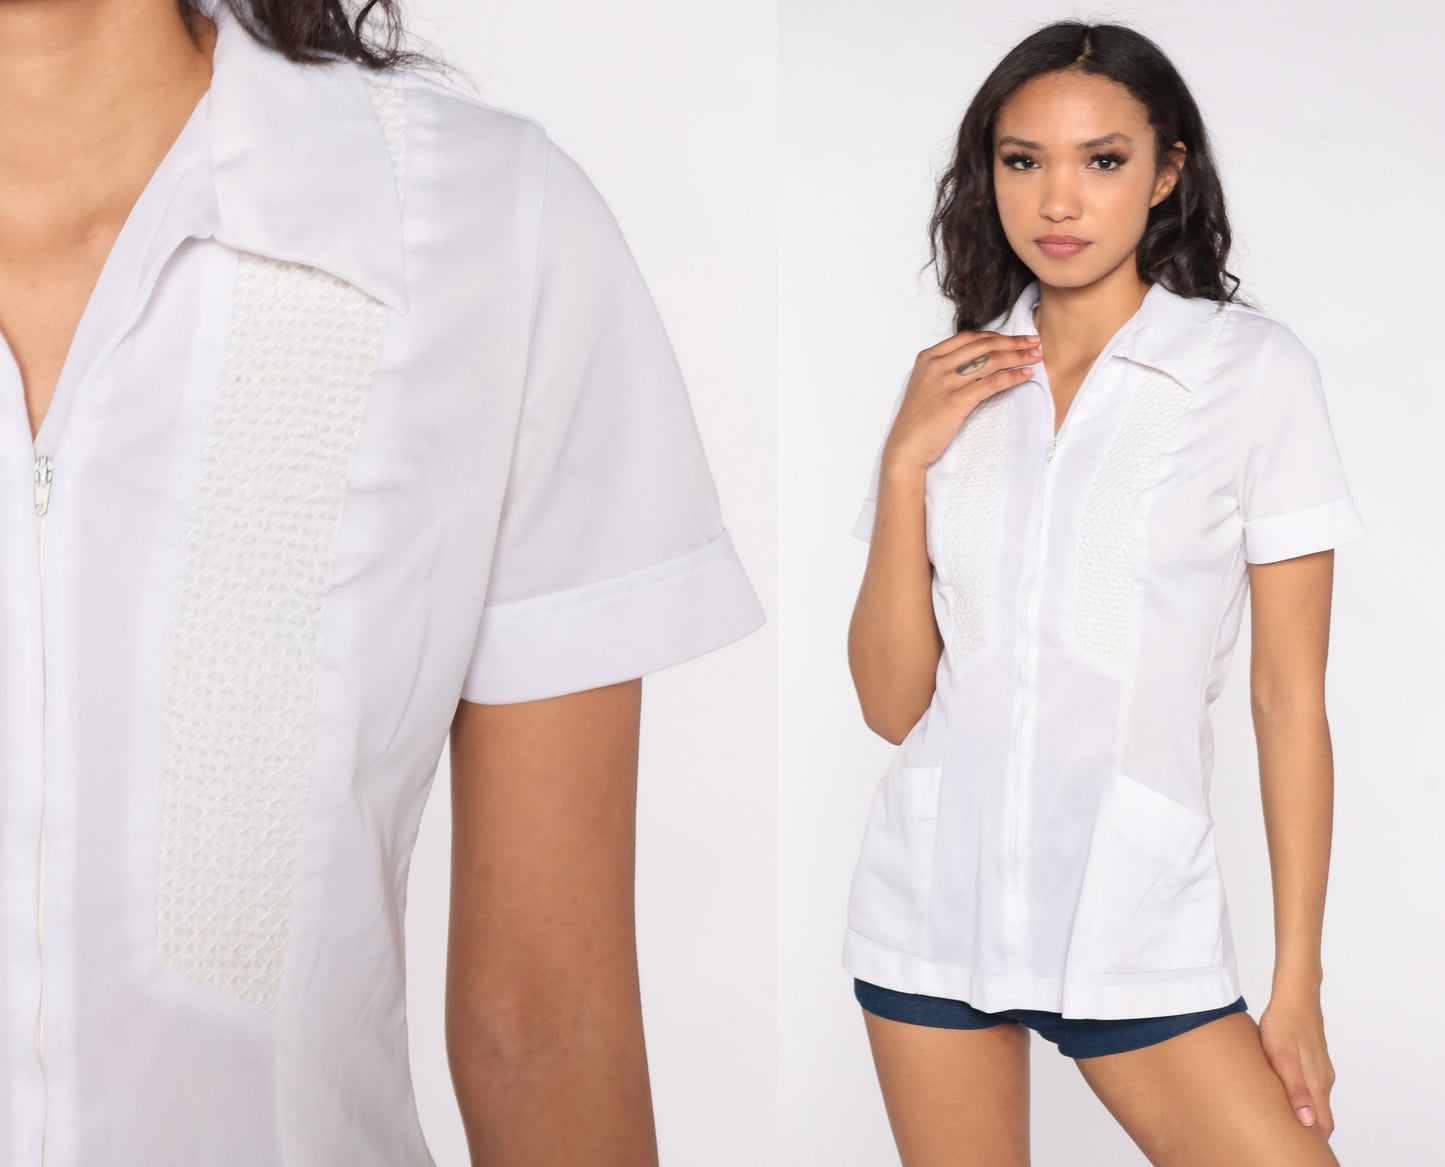 White Nurse Shirt 70s Blouse Uniform Shirt Zip Up Shirt Hippie Boho 1970s Shirt Disco Top Vintage Collared Plain Short Sleeve Medium